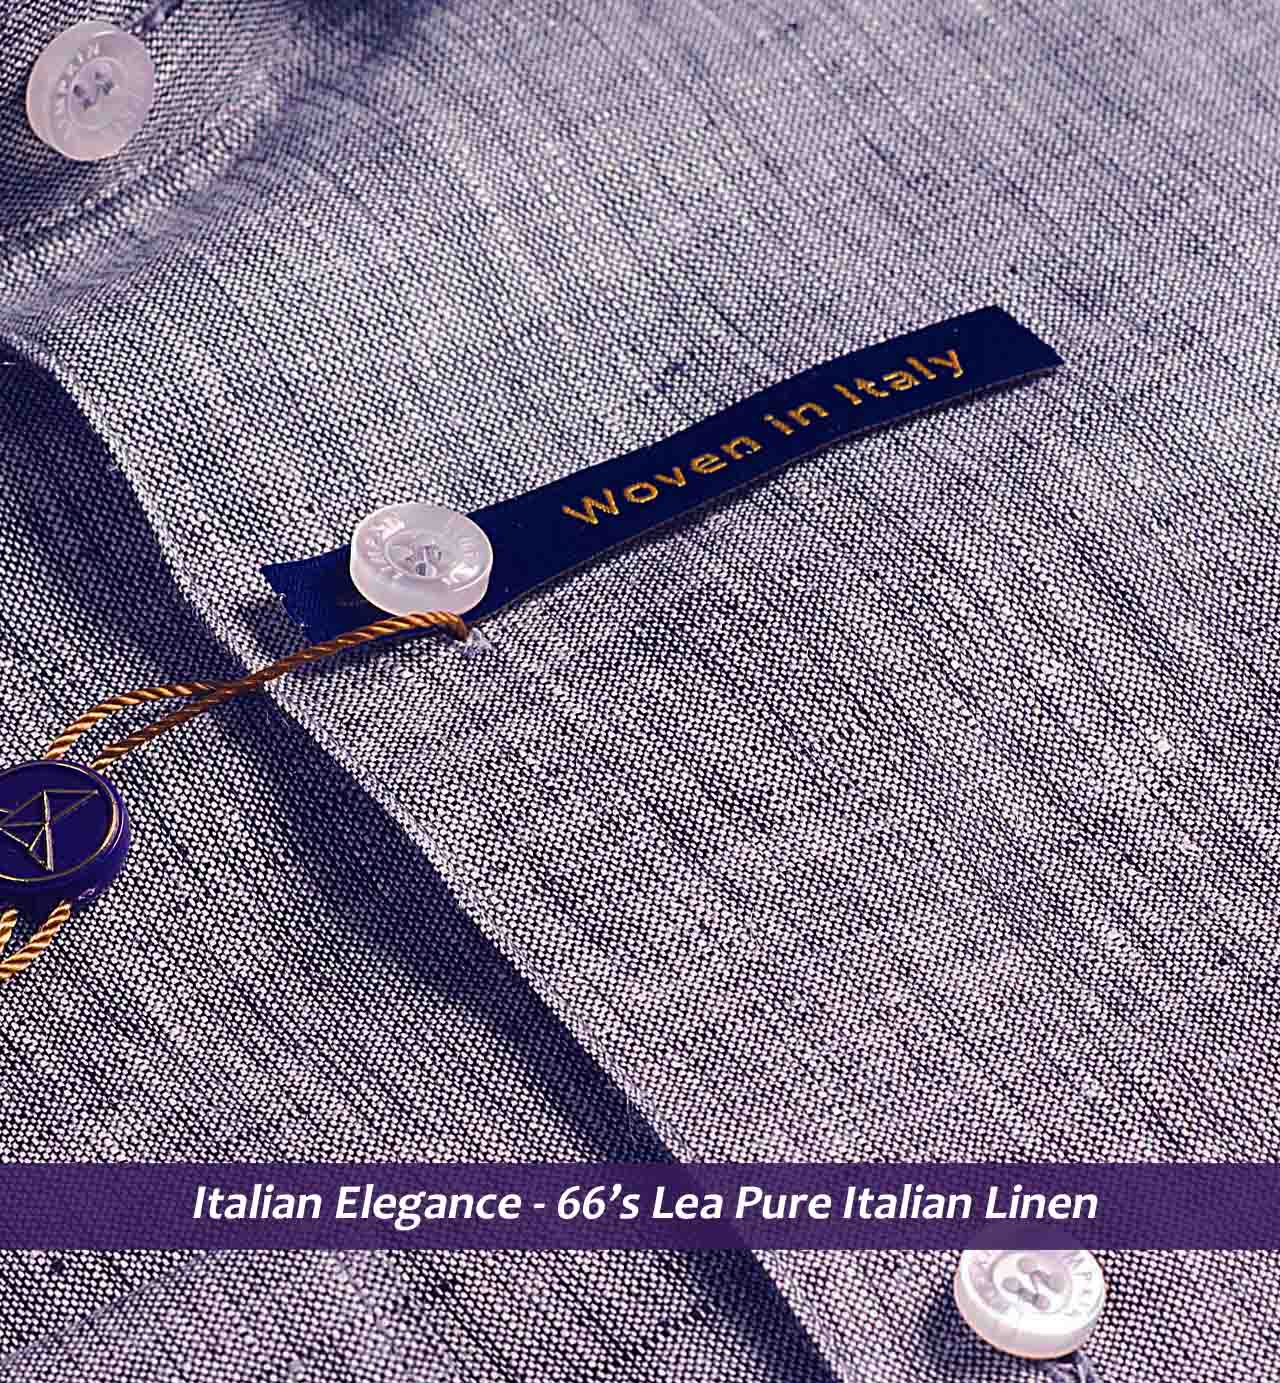 Steel Grey Solid Linen- 66's Lea Pure Italian Linen